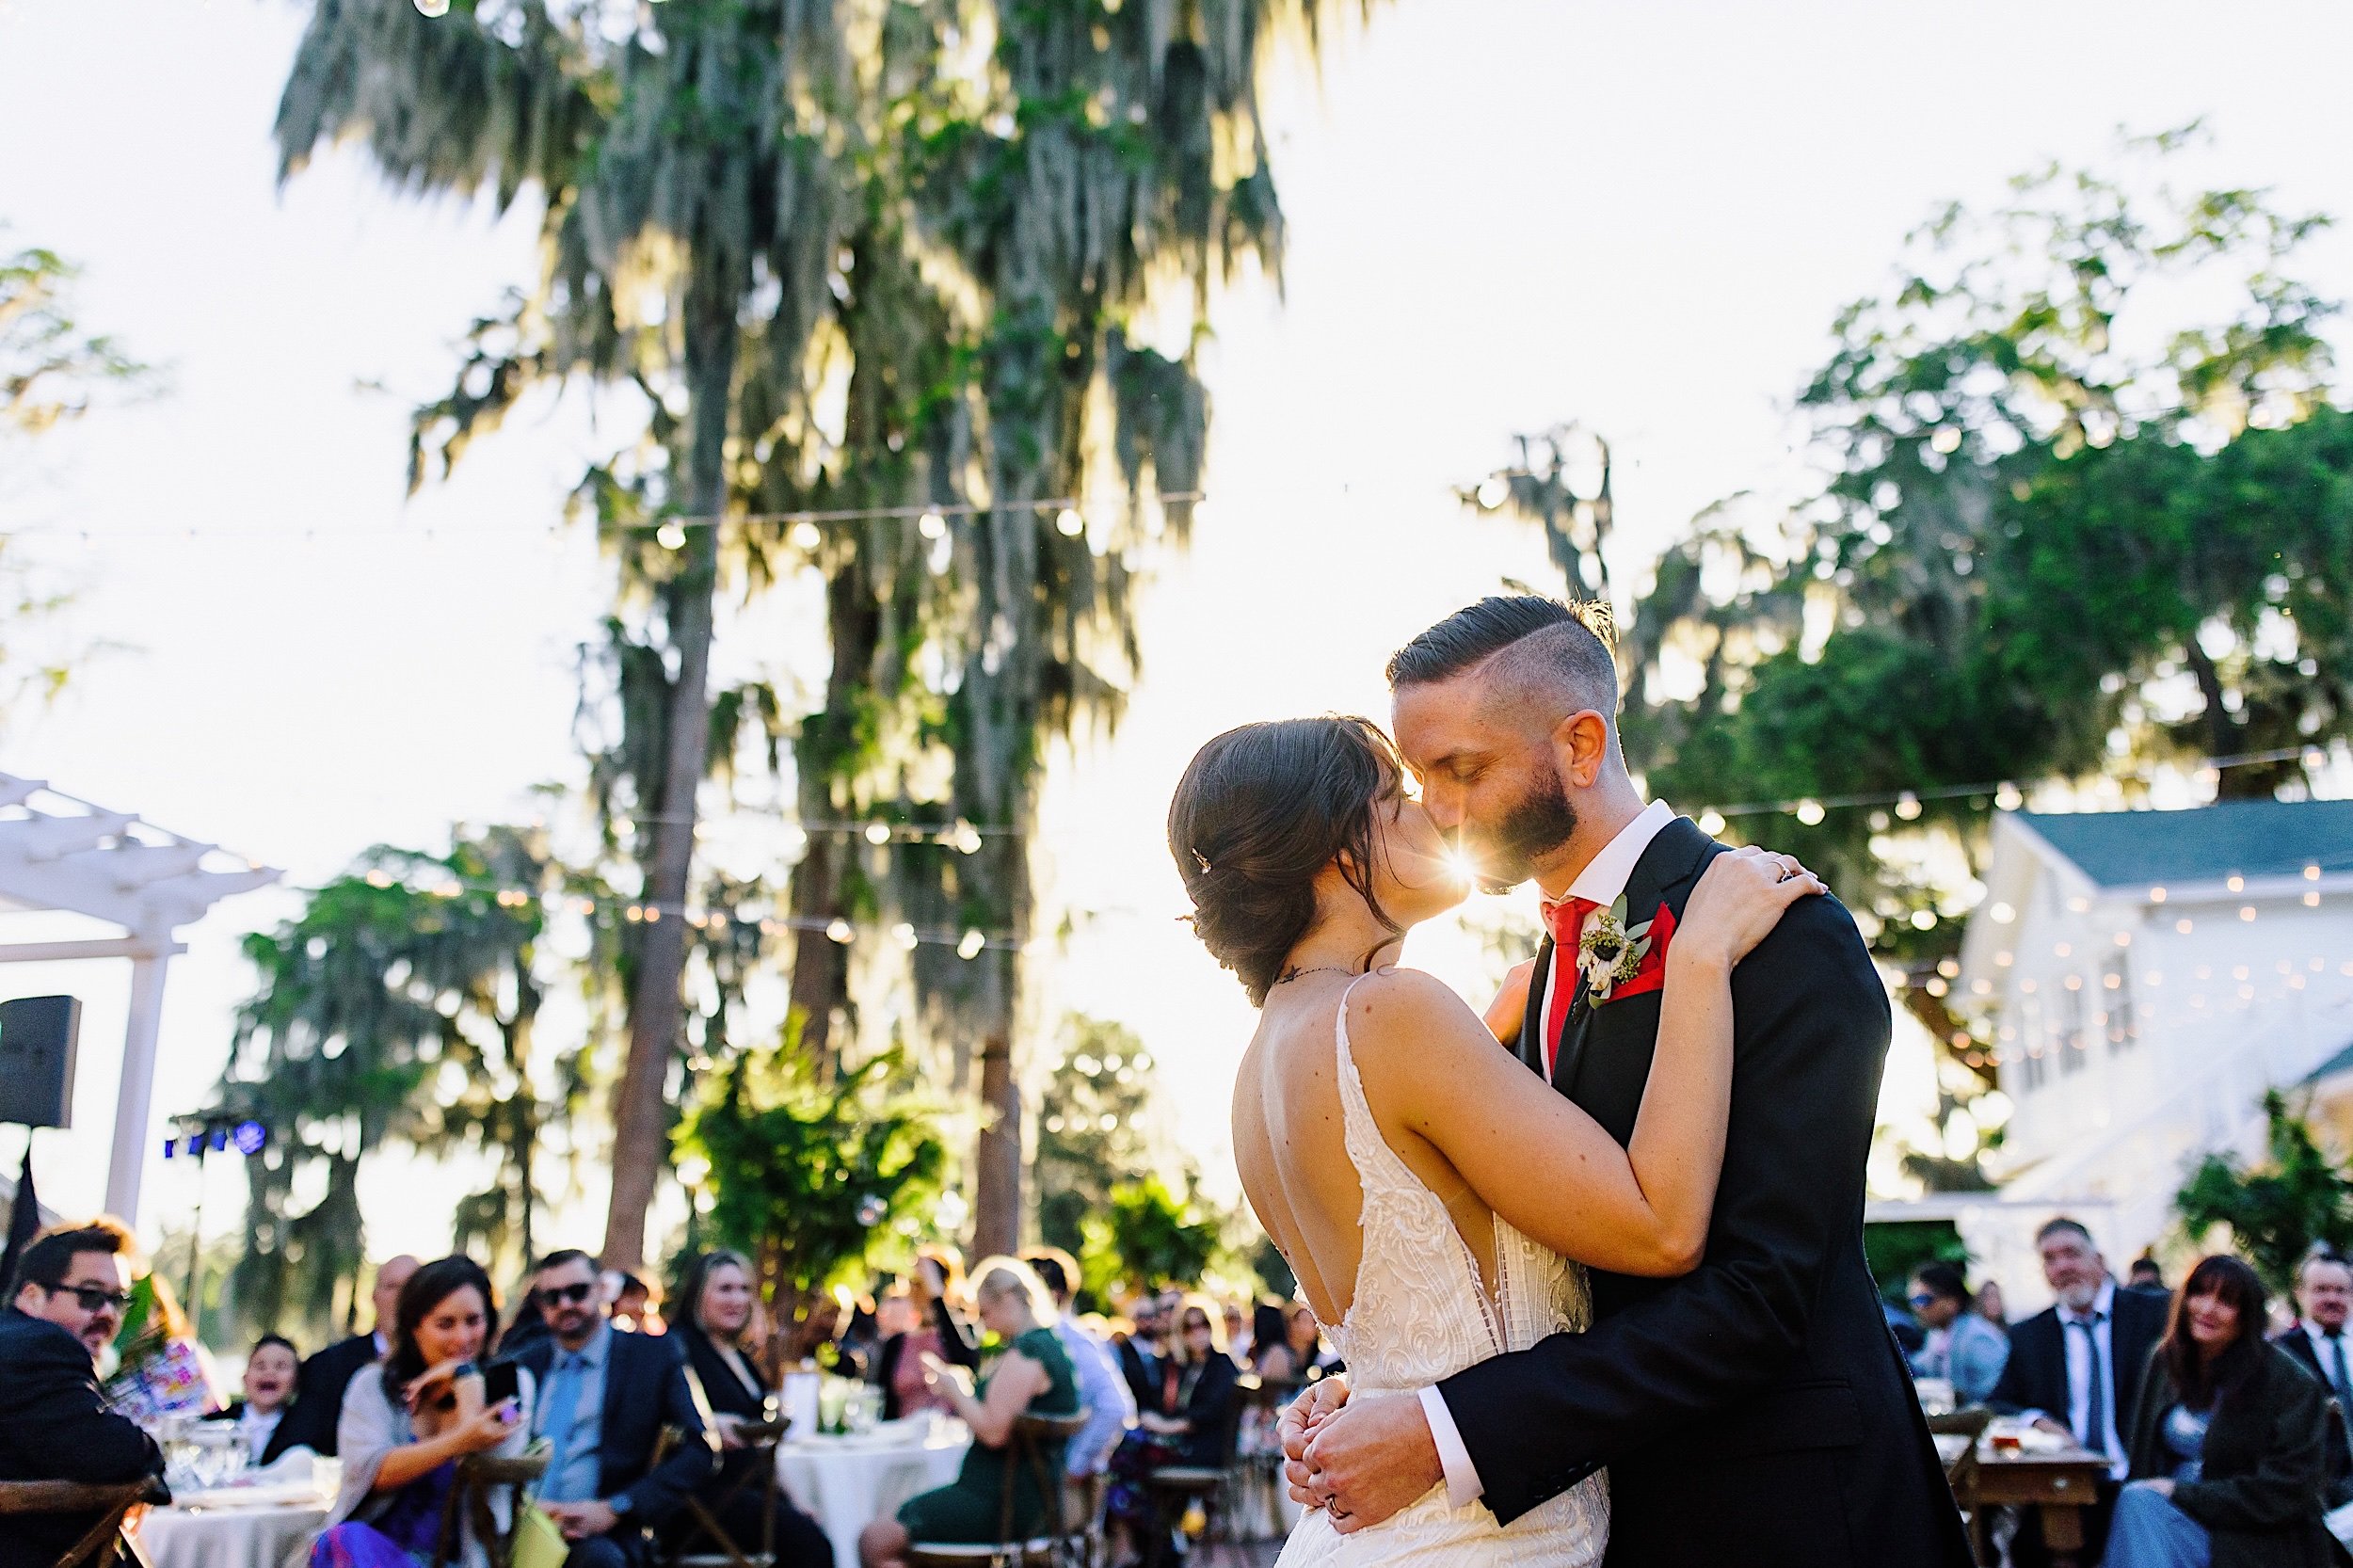 008-Bride-and-Groom-first-dance-at-outdoor-Orlando-wedding.jpg